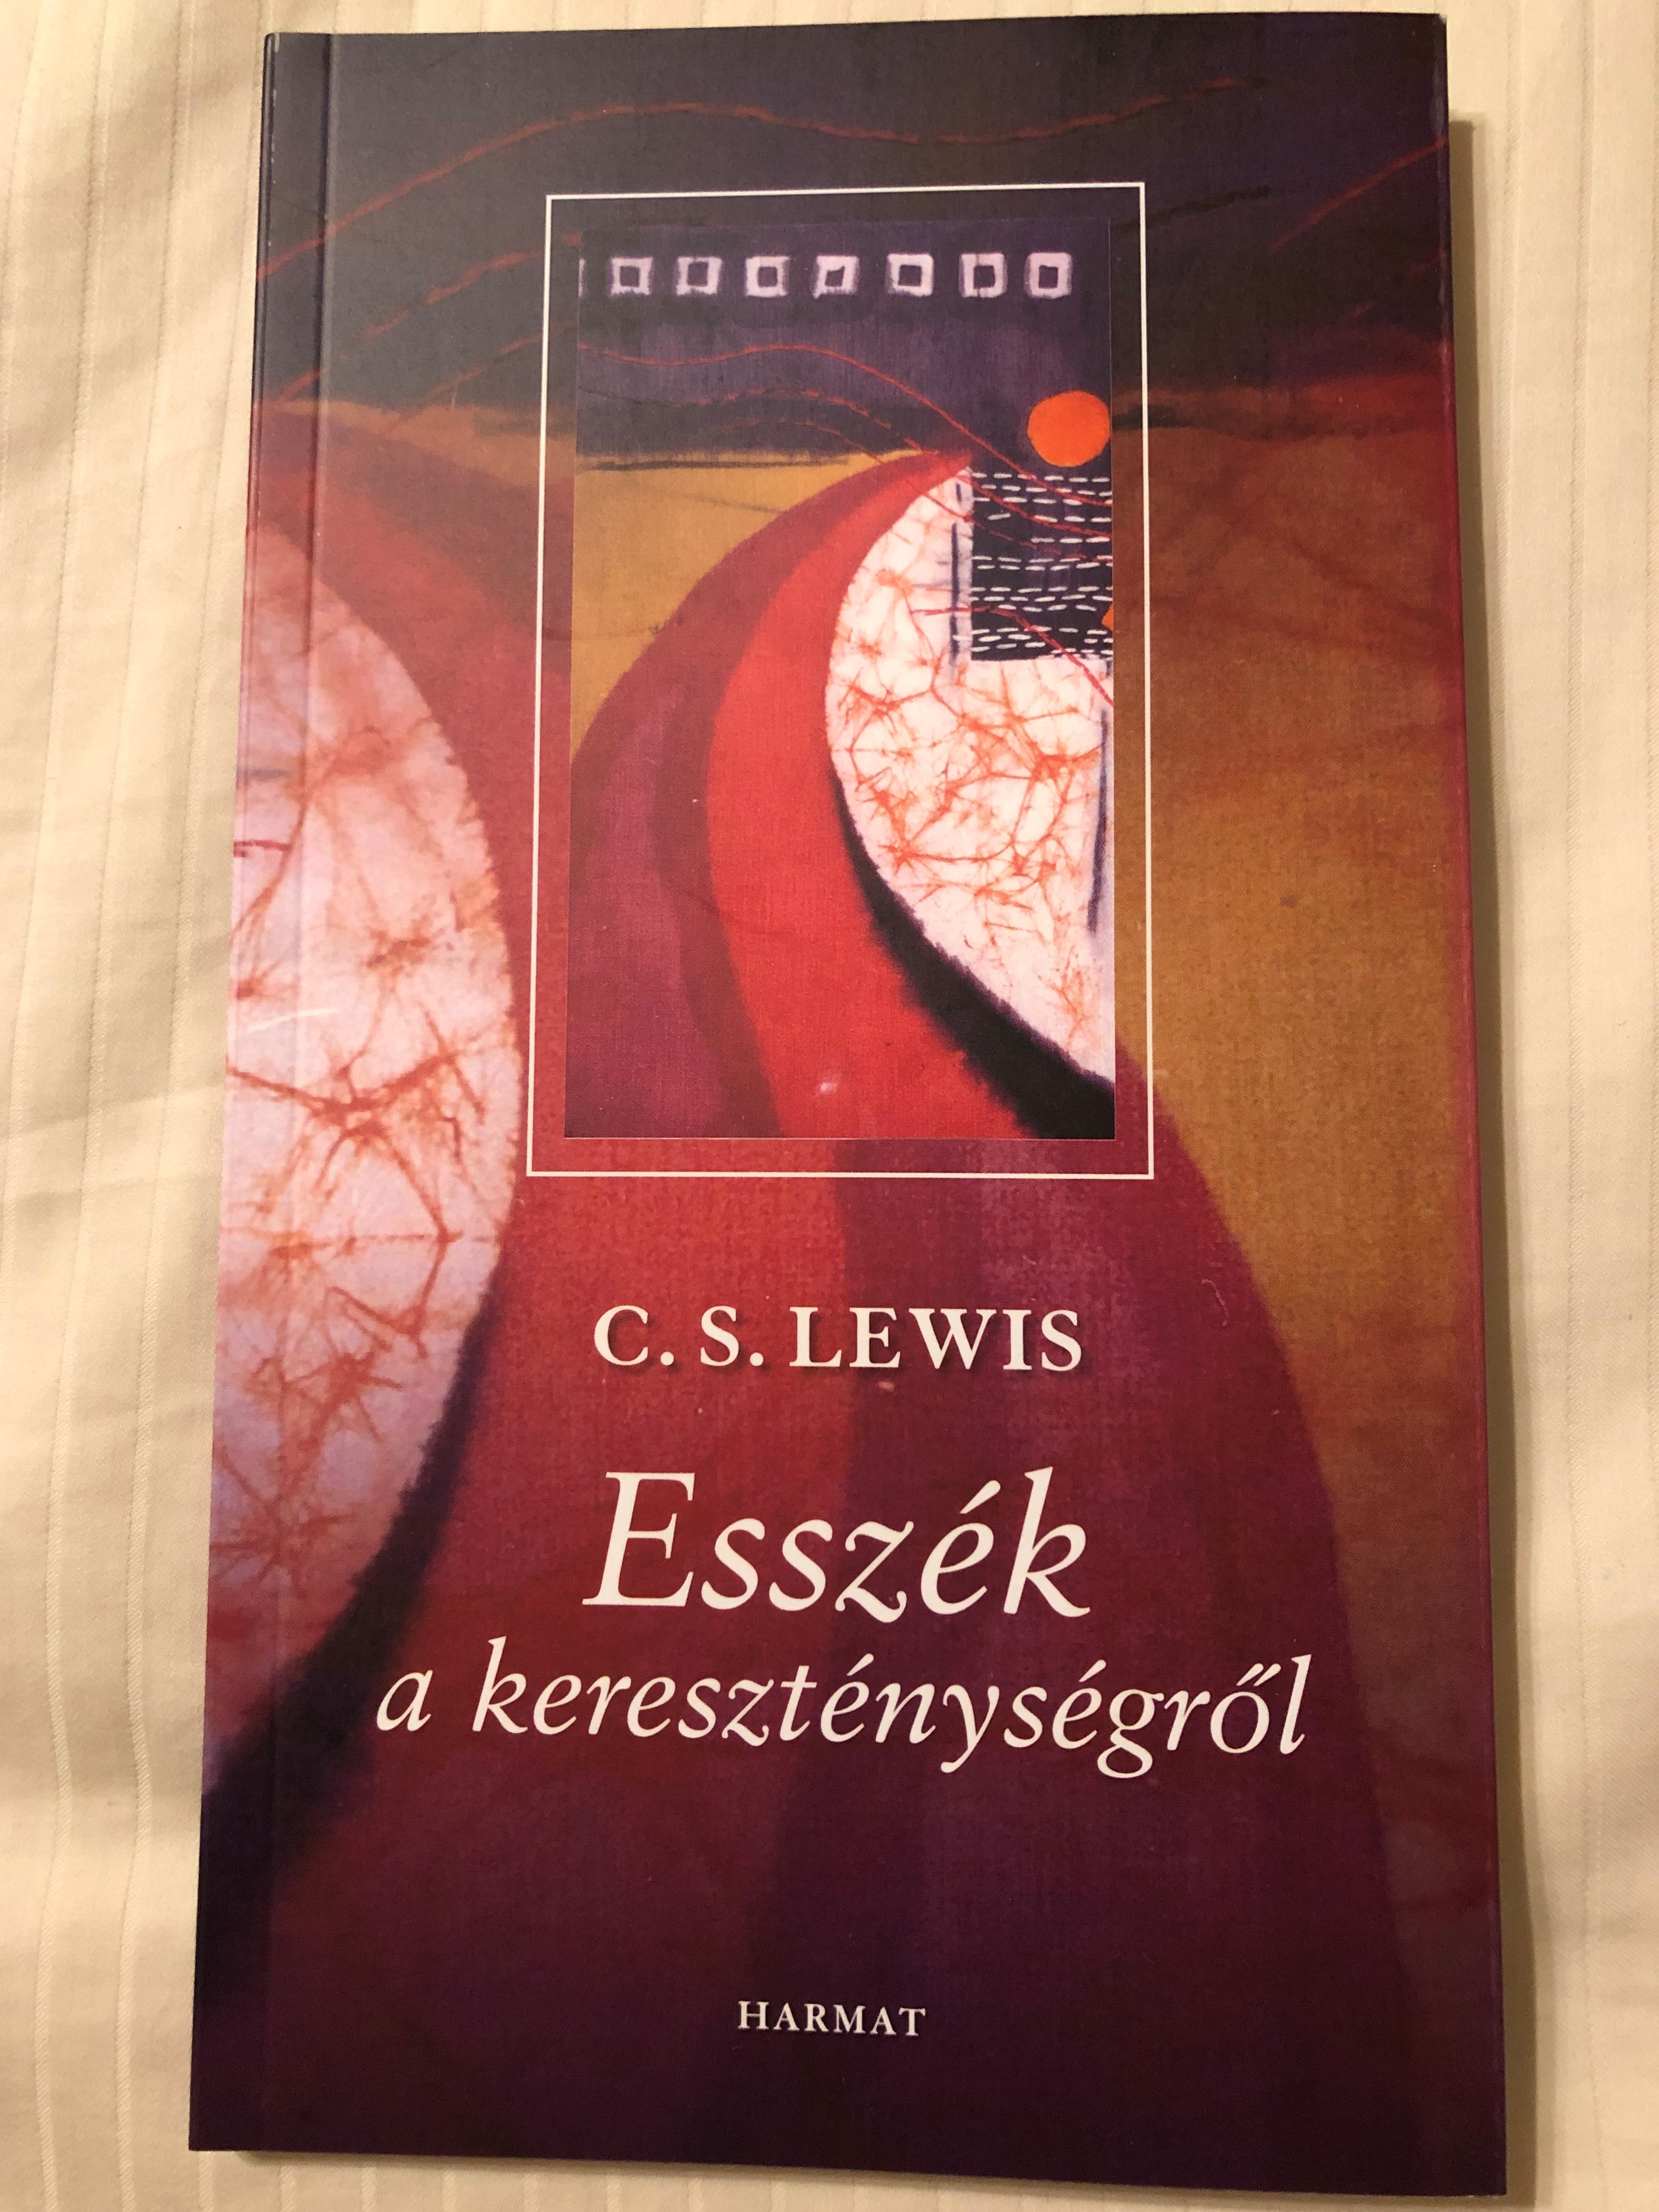 essz-k-a-kereszt-nys-gr-l-by-c.-s.-lewis-hungarian-translation-of-essay-collection-1.jpg